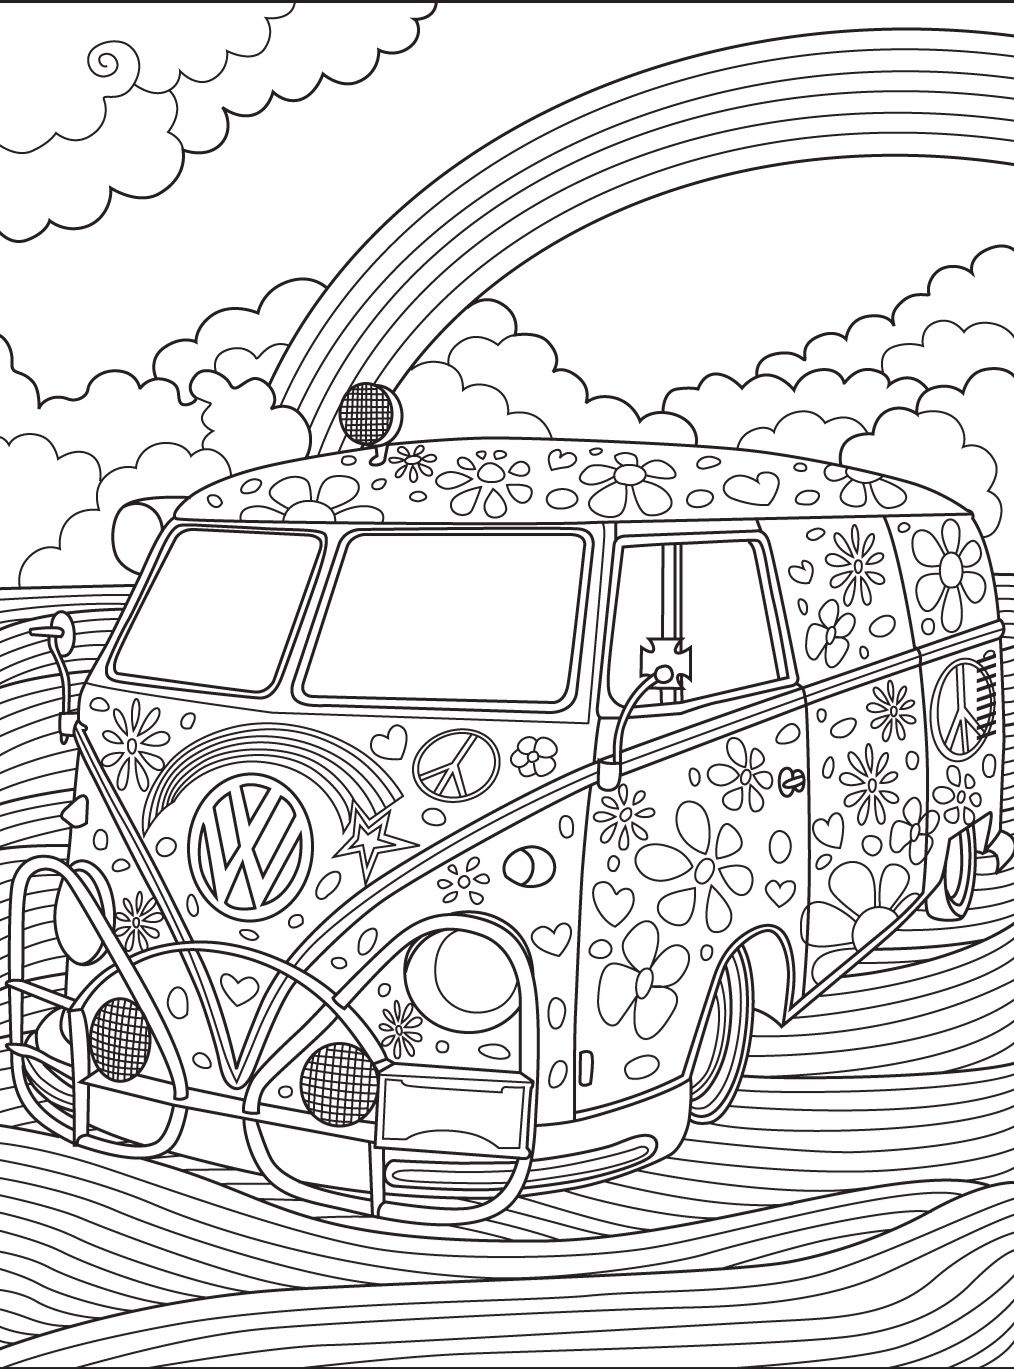 Hippie Van Coloring Pages at GetColorings.com | Free printable